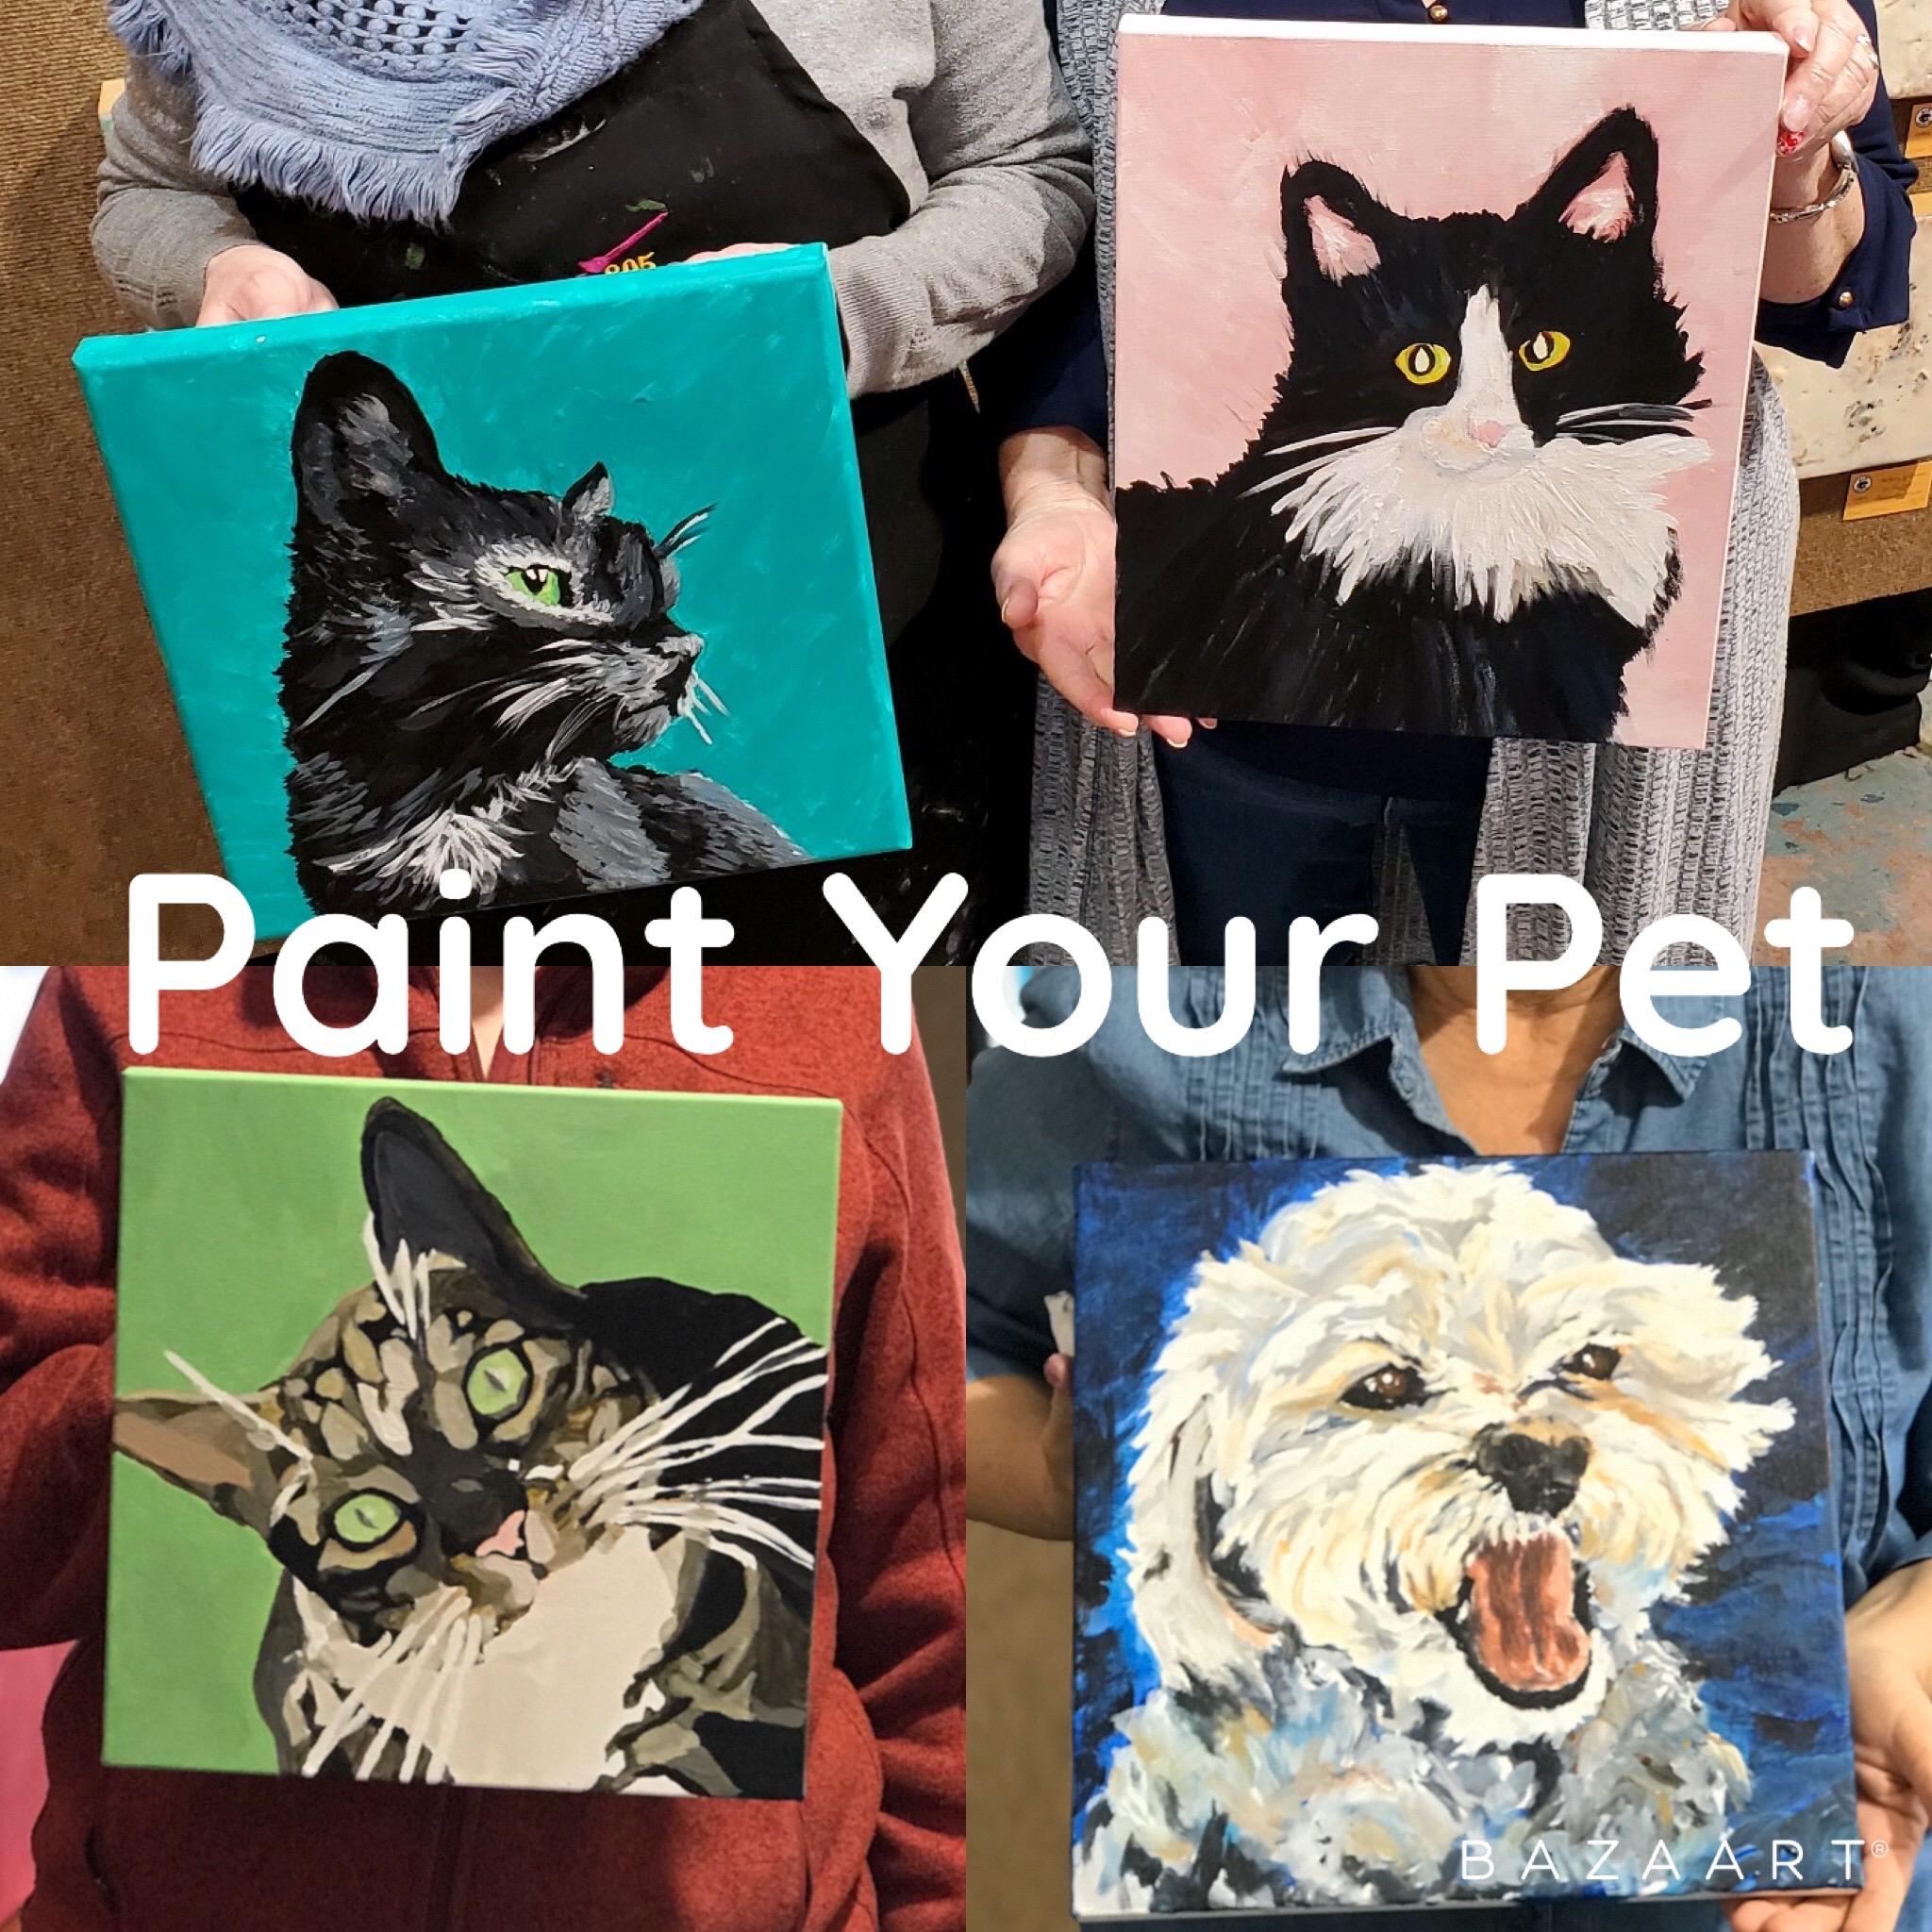 Paint Your Pet at Art Central